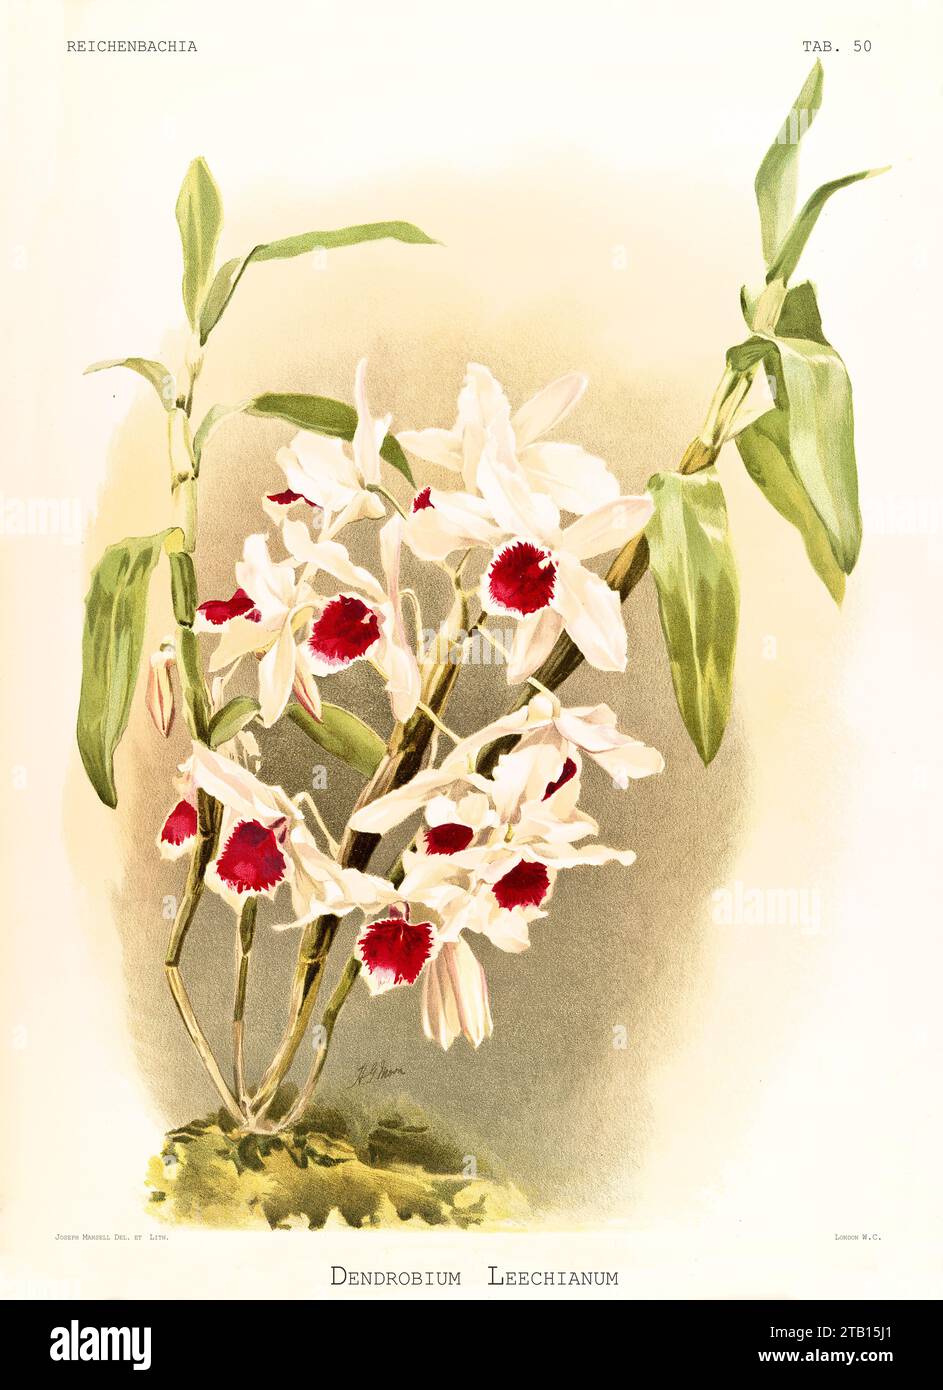 Old illustration of  Dendrobium leechianum. Reichenbachia, by F. Sander. St. Albans, UK, 1888 - 1894 Stock Photo